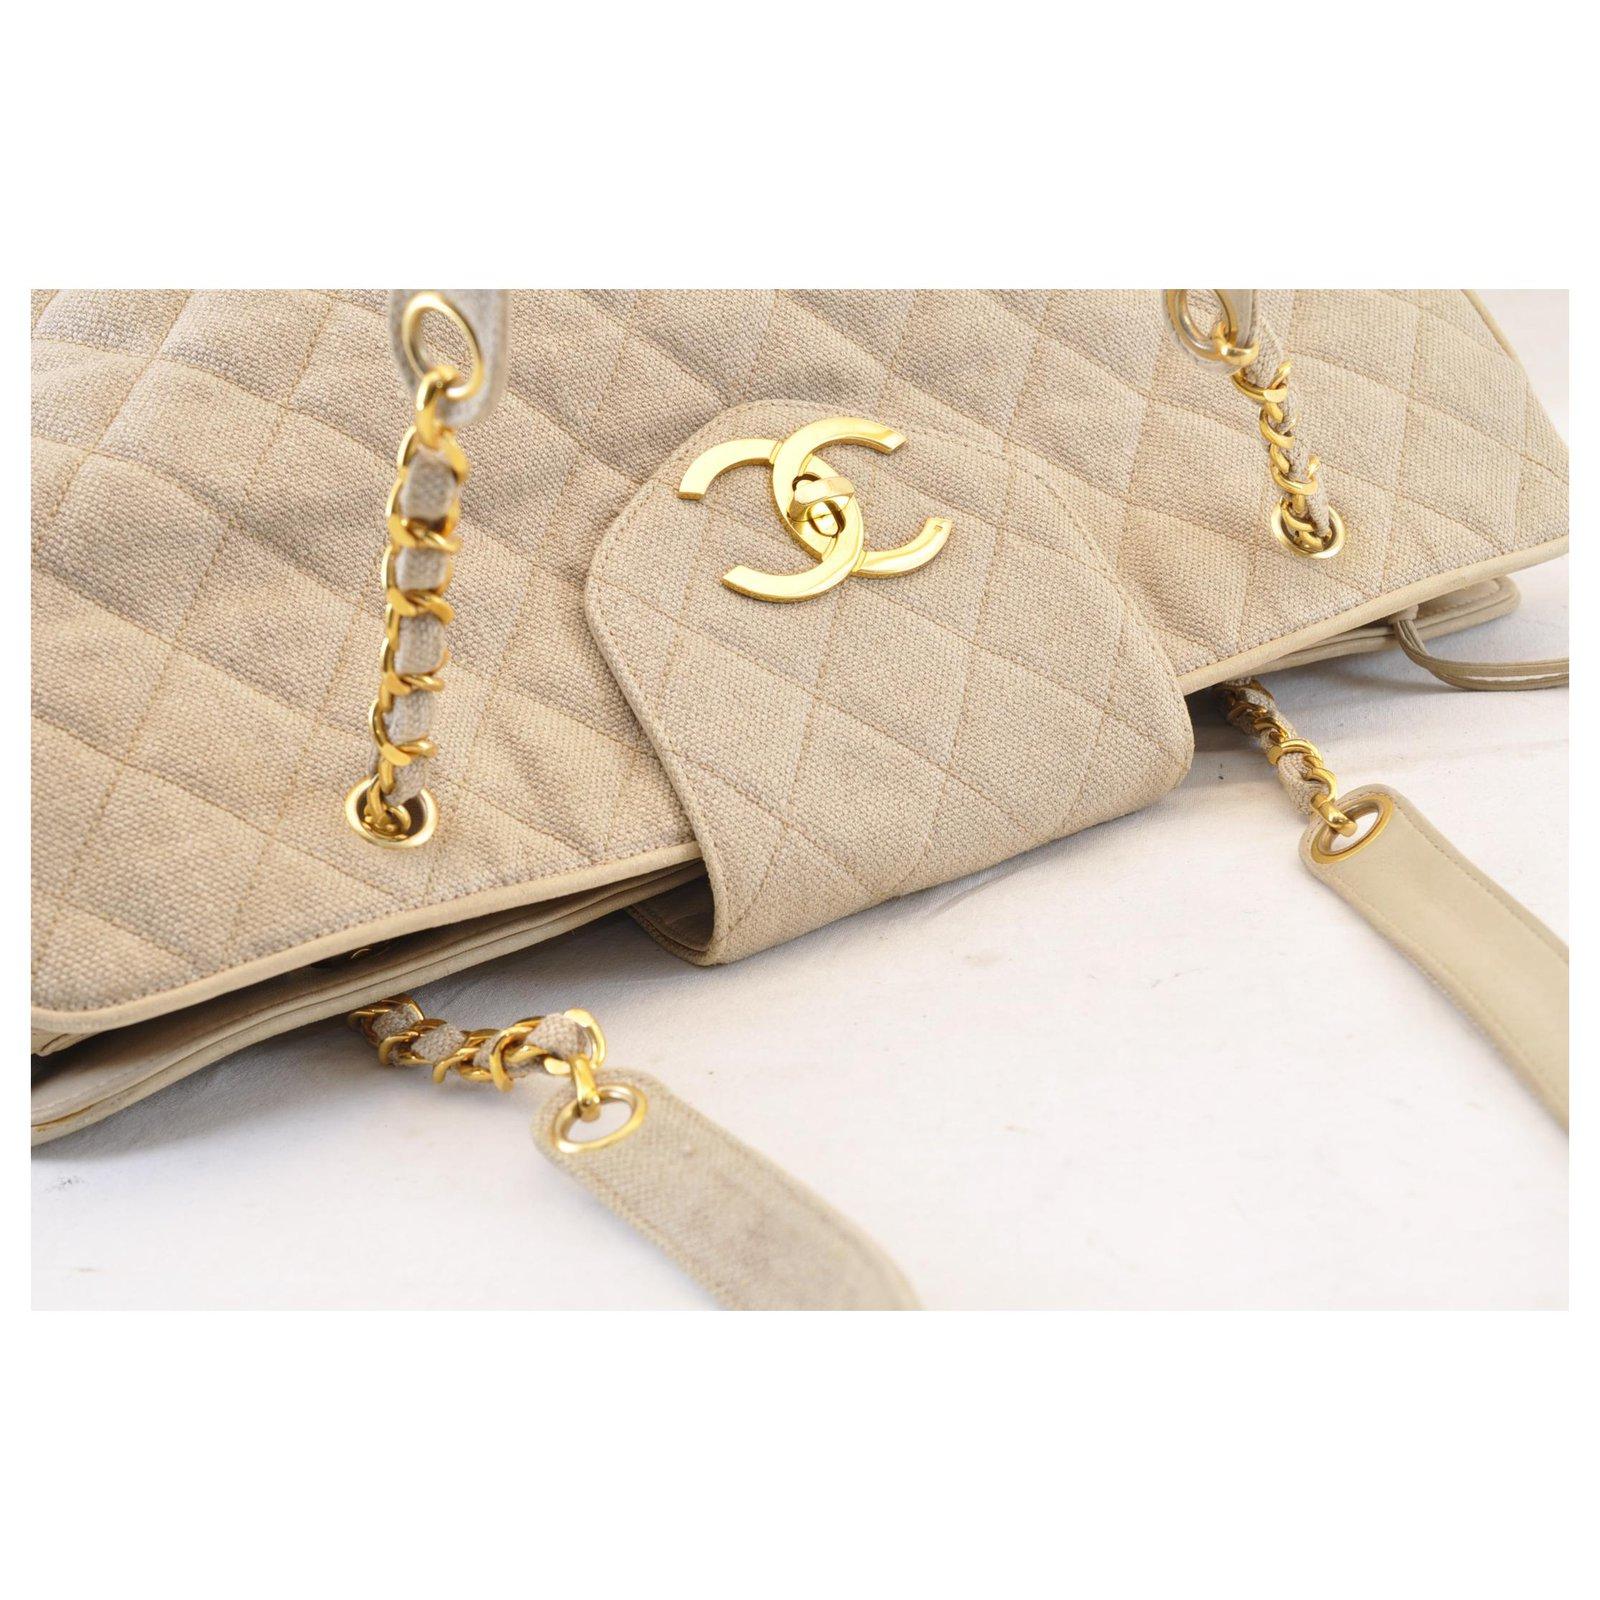 Chanel 1994 Vintage Organic Beige XL Weekend Travel Supermodel Classic Flap Bag For Sale 2